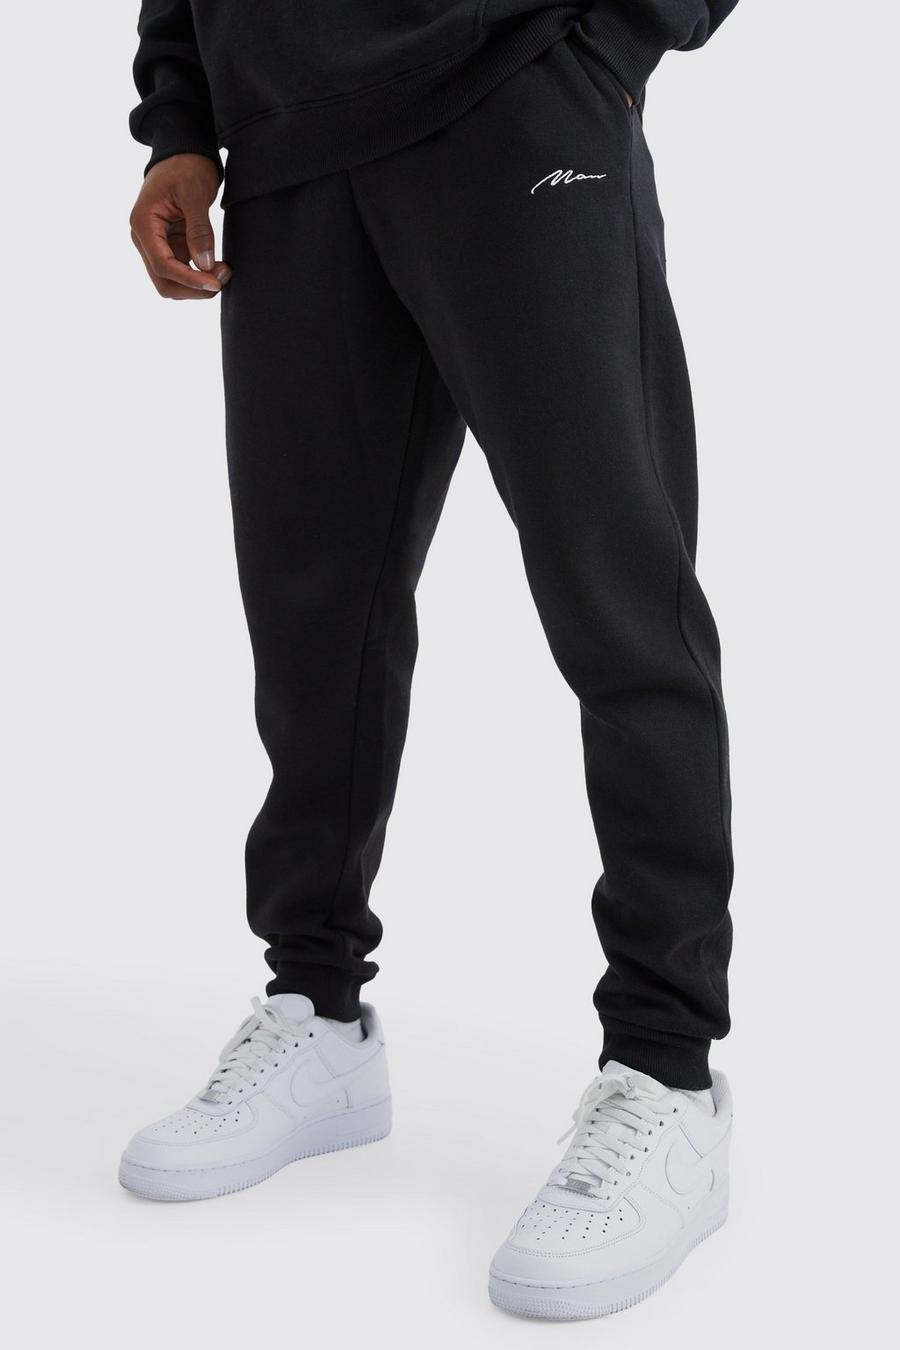 Pantalón deportivo ajustado con firma MAN, Black nero